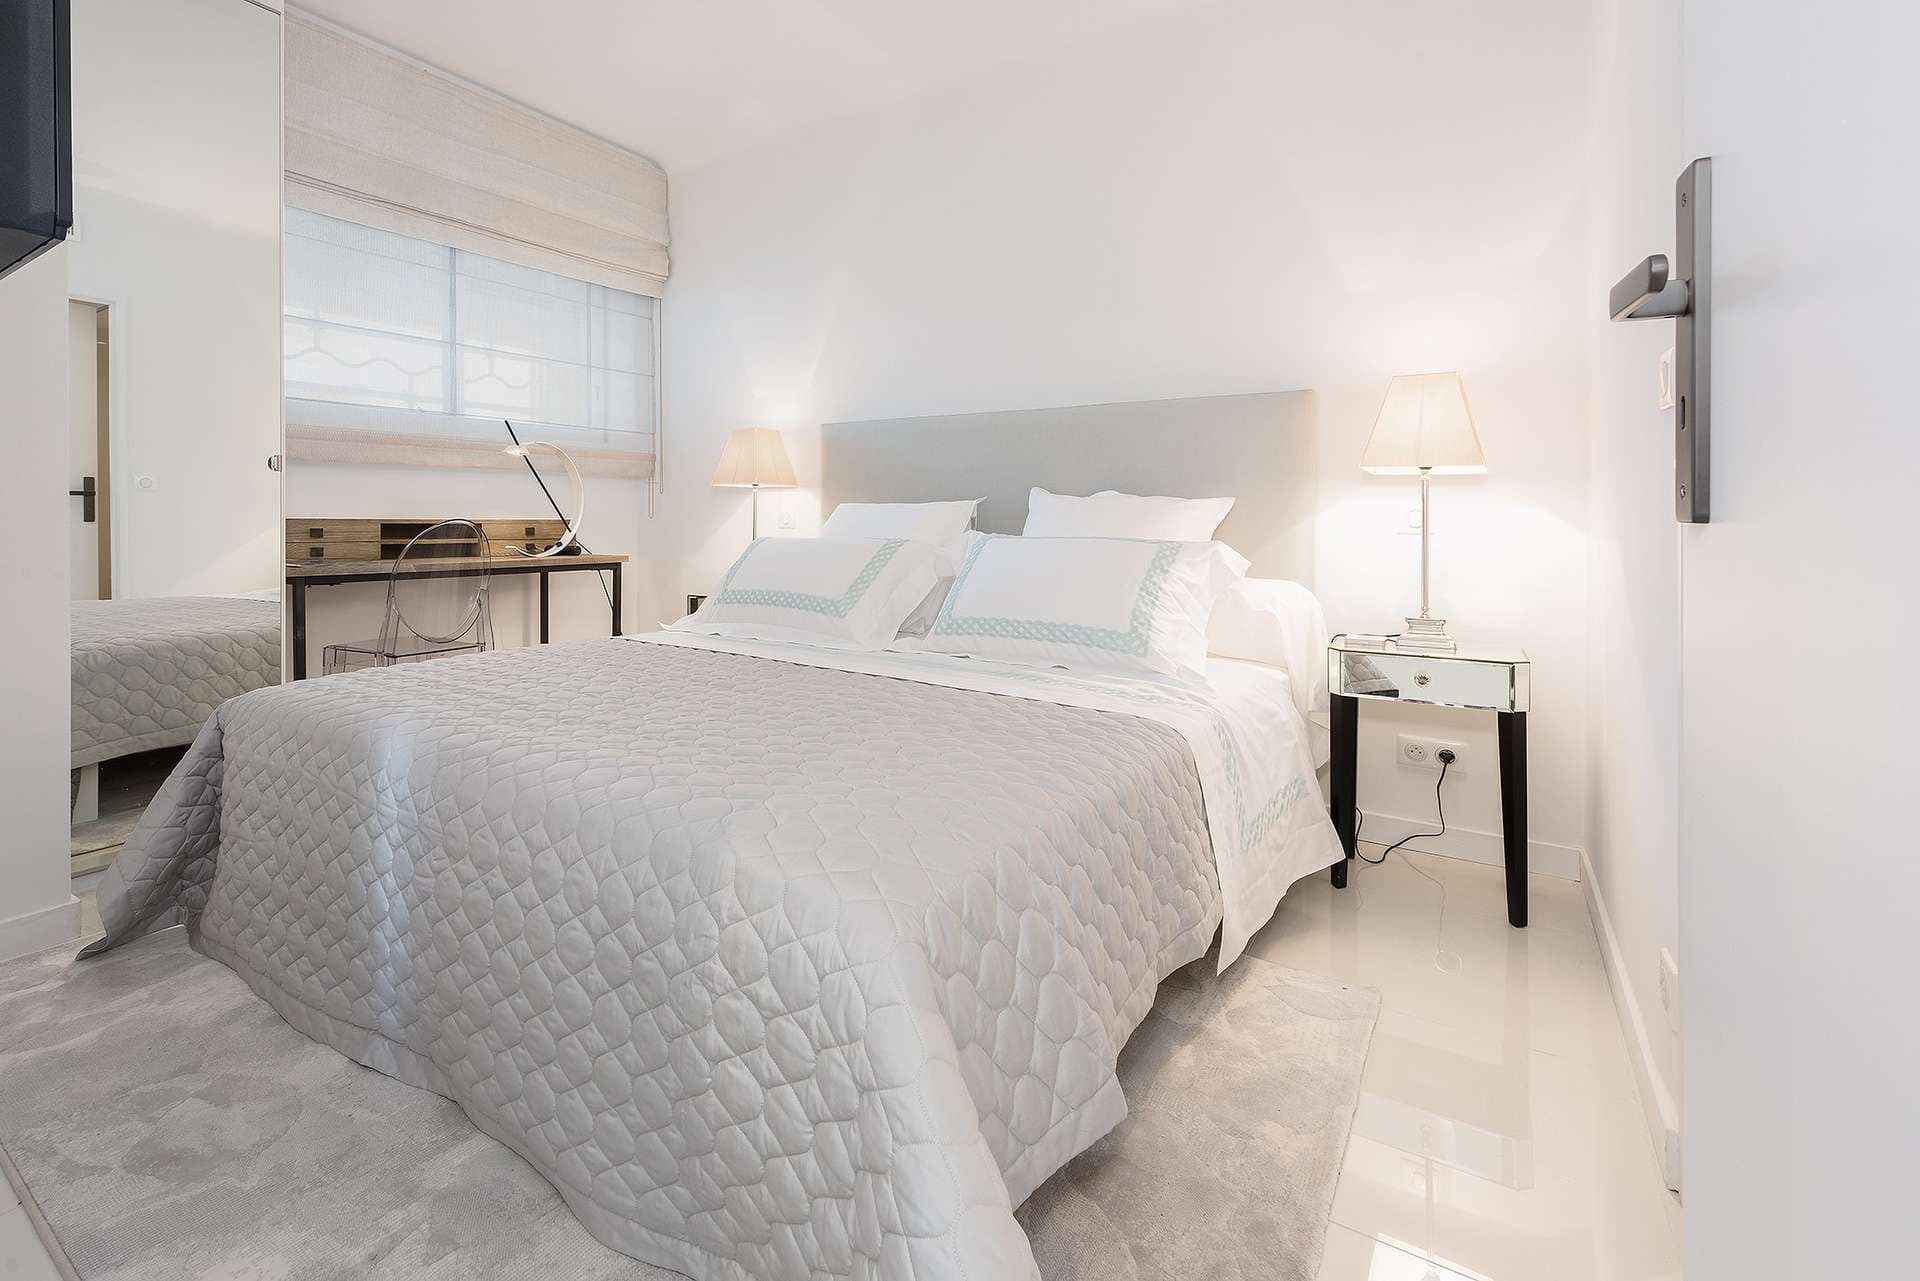 2 Bedroom Apartment For Sale Cannes Lp01009 2d185f7548fbd800.jpg